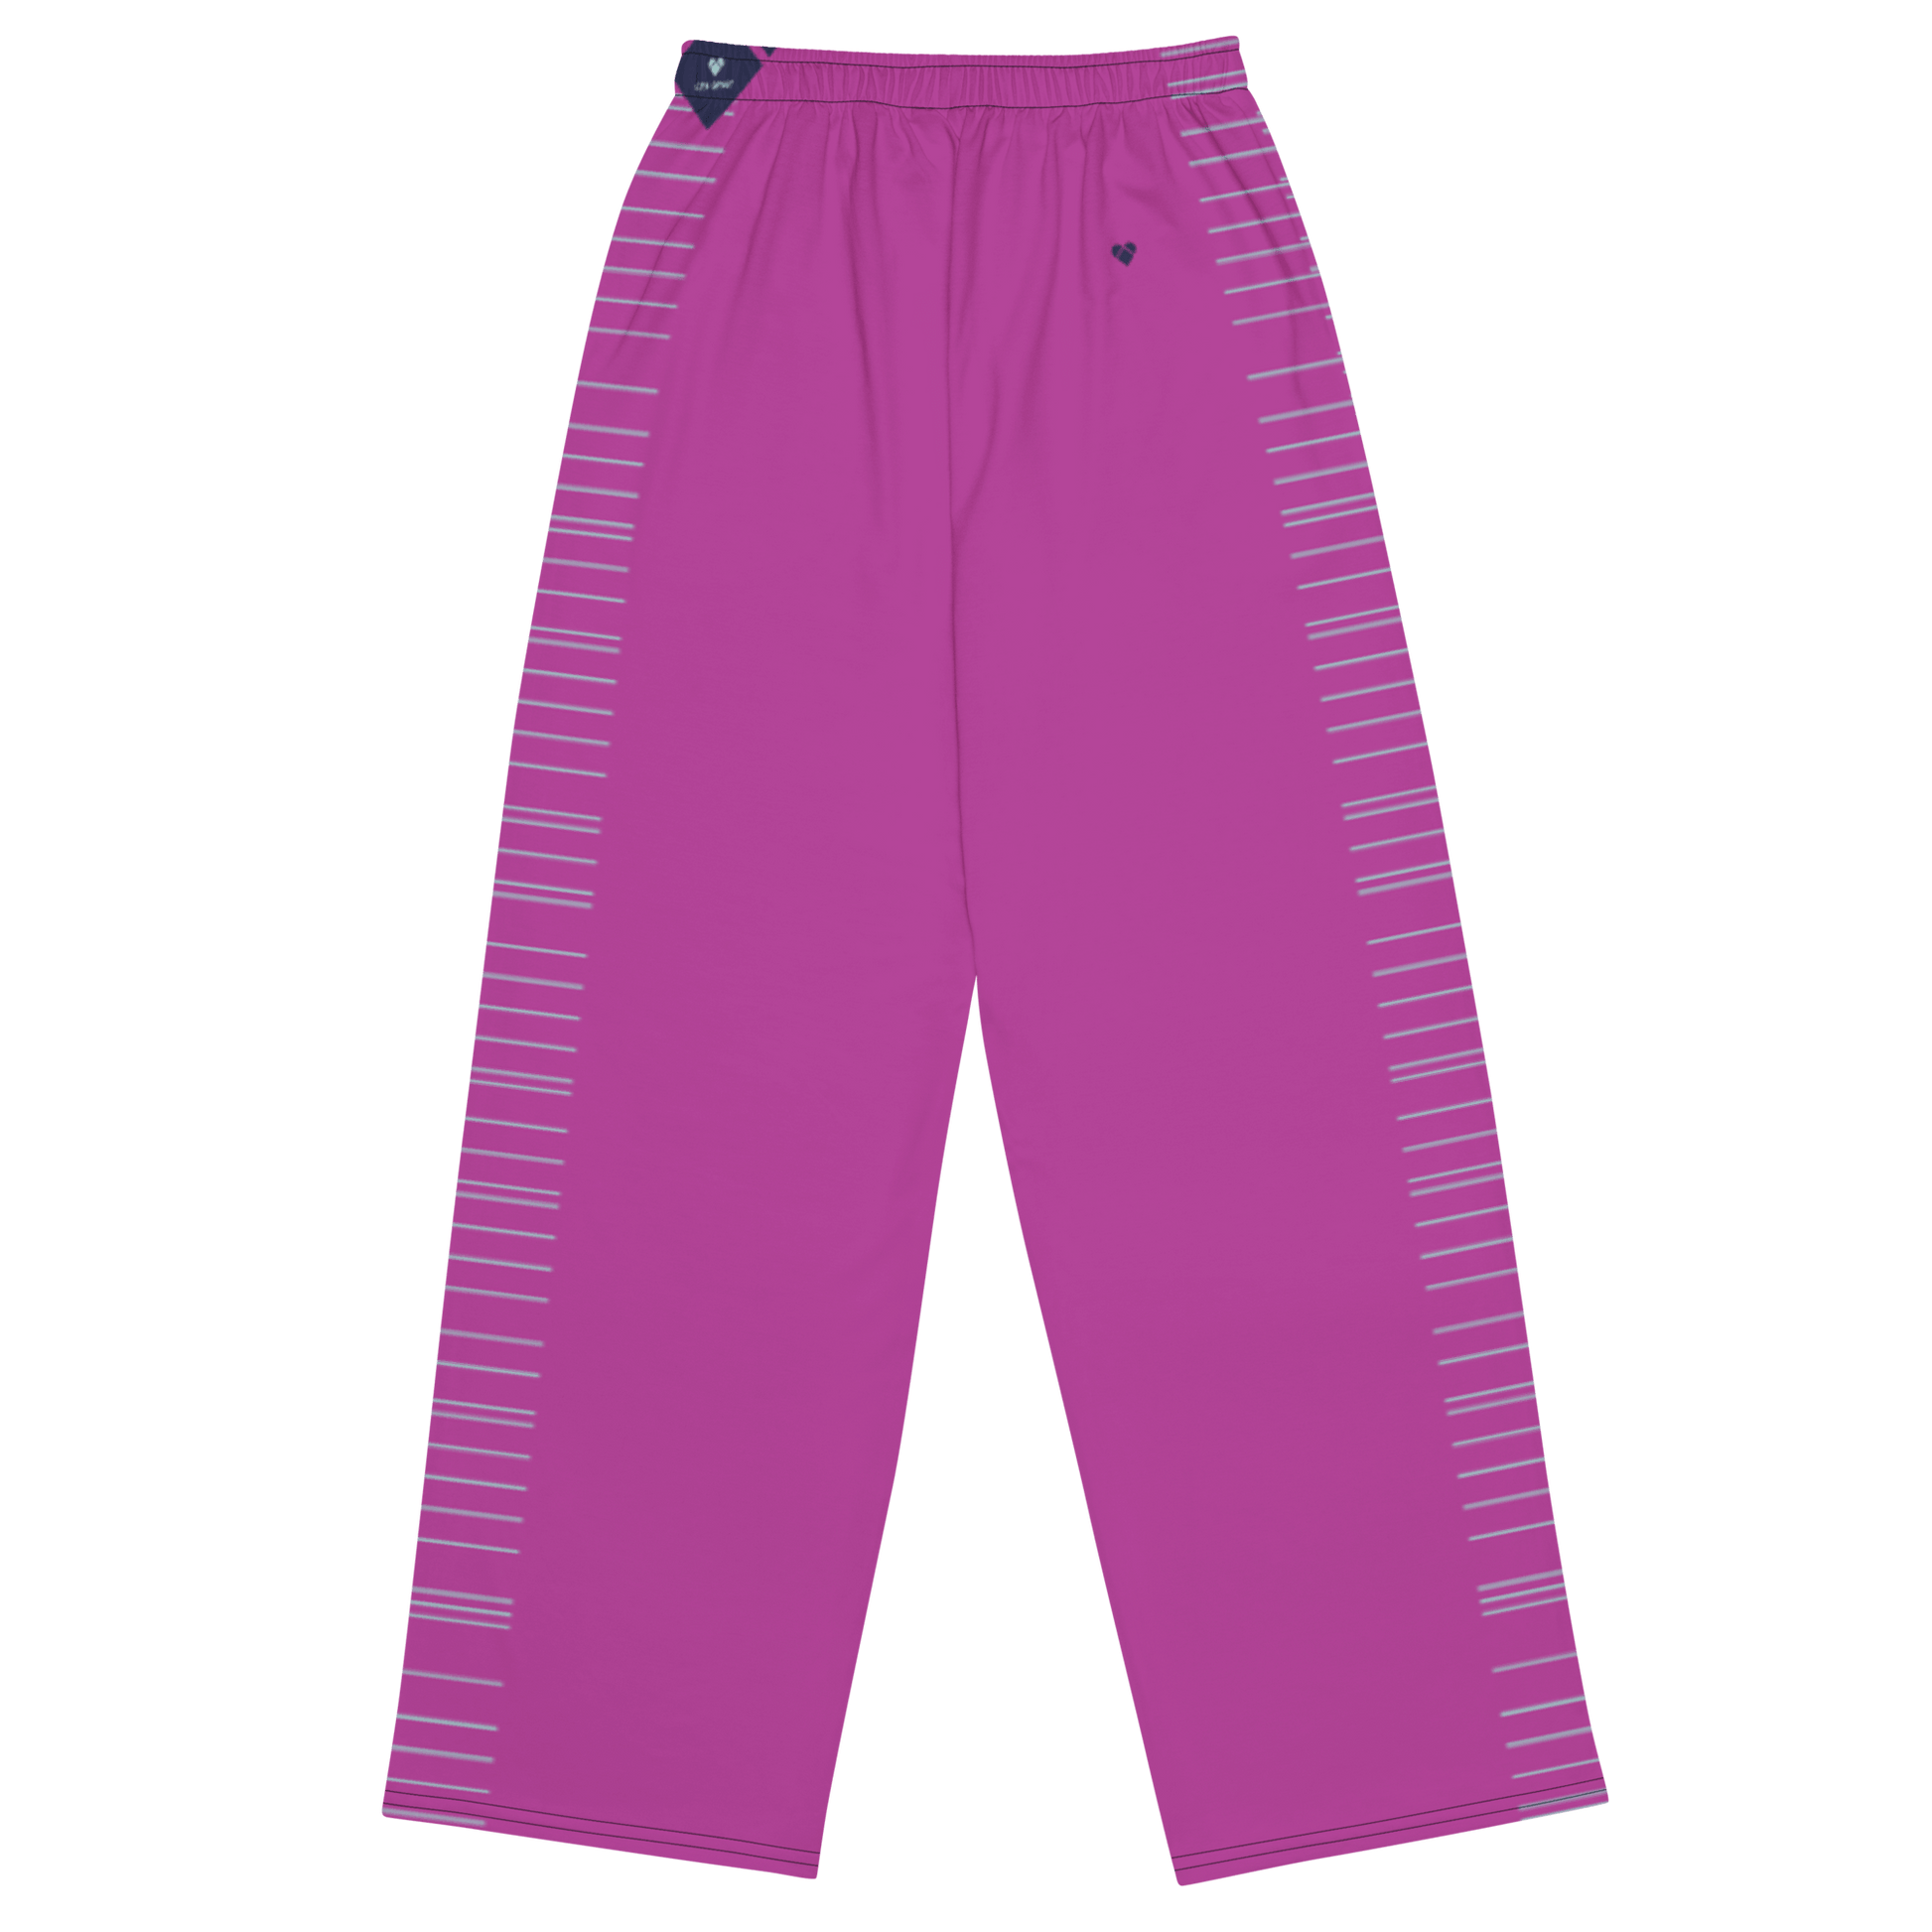 CRiZ AMOR Genderless Pants - Bold Fucsia and Mint Stripes